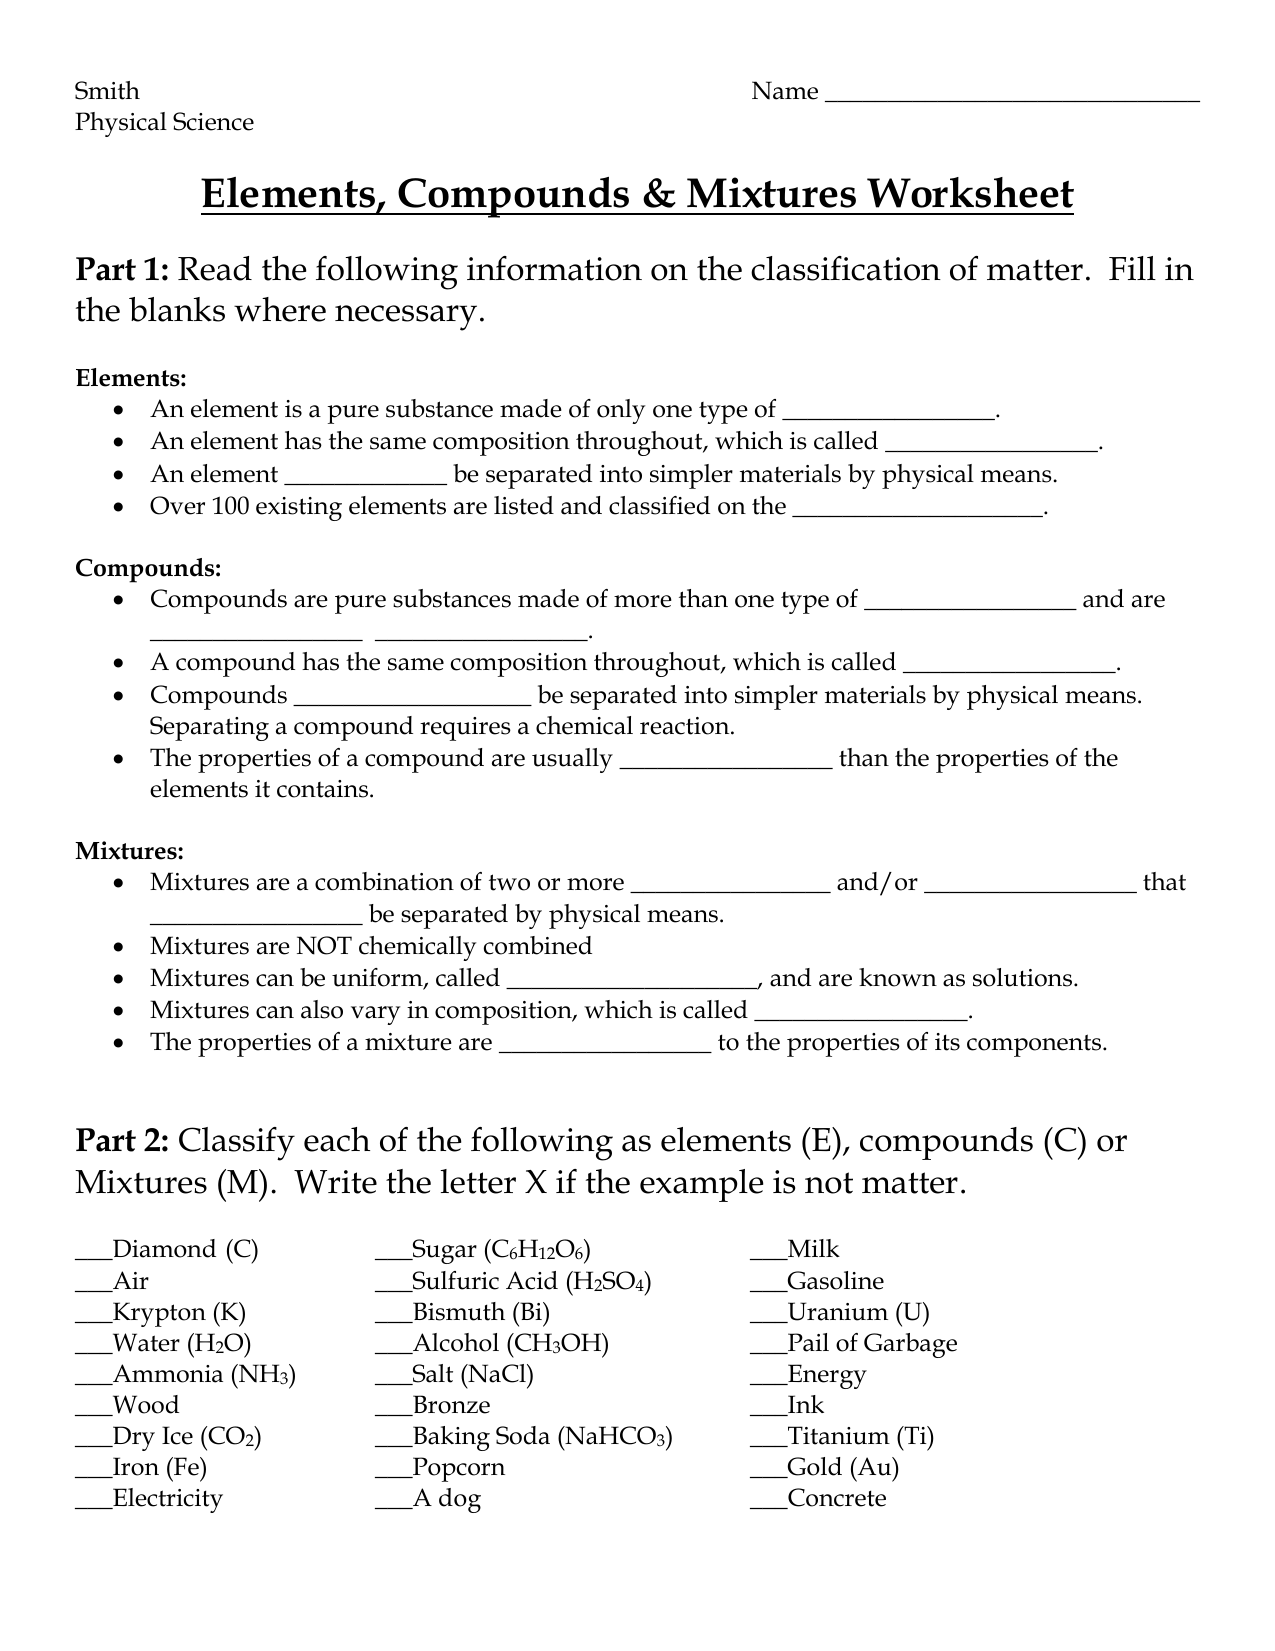 Elements, Compounds & Mixtures Worksheet Intended For Elements Compounds Mixtures Worksheet Answers